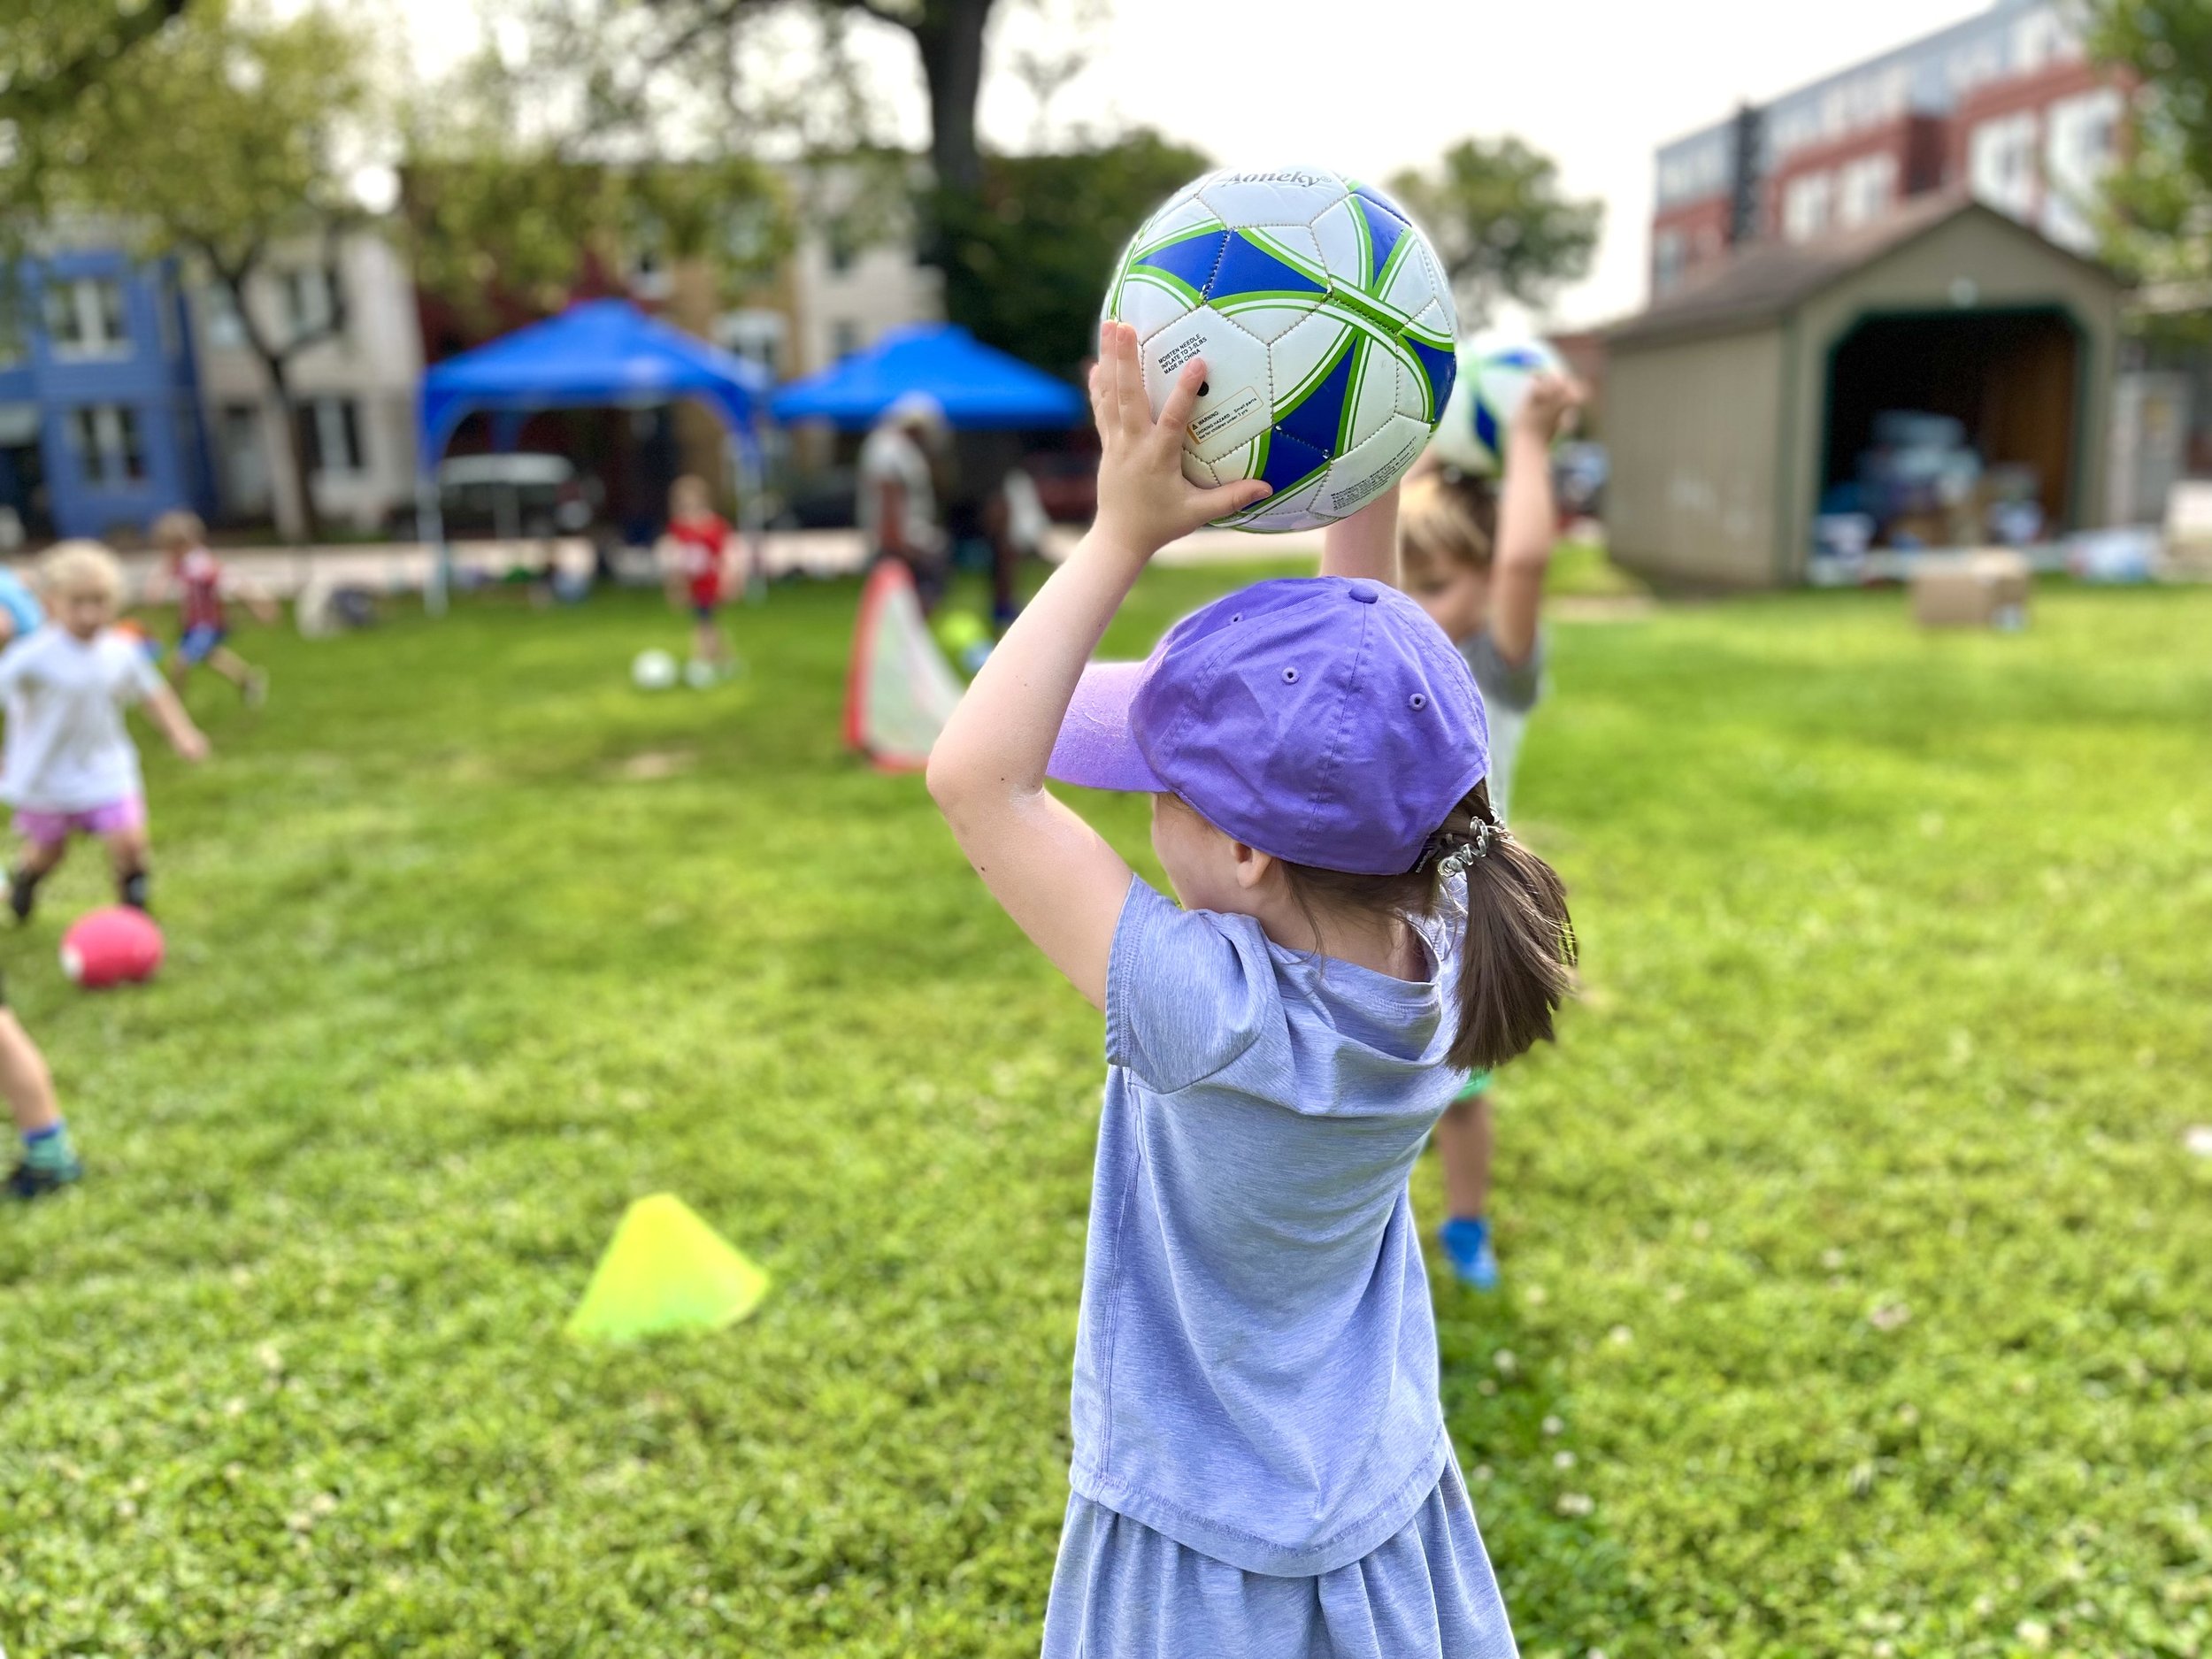 Dc-way-soccer-club-for-kids-in-washington-dc-summer-camp-at-tyler-elementary-school- 9035.jpeg